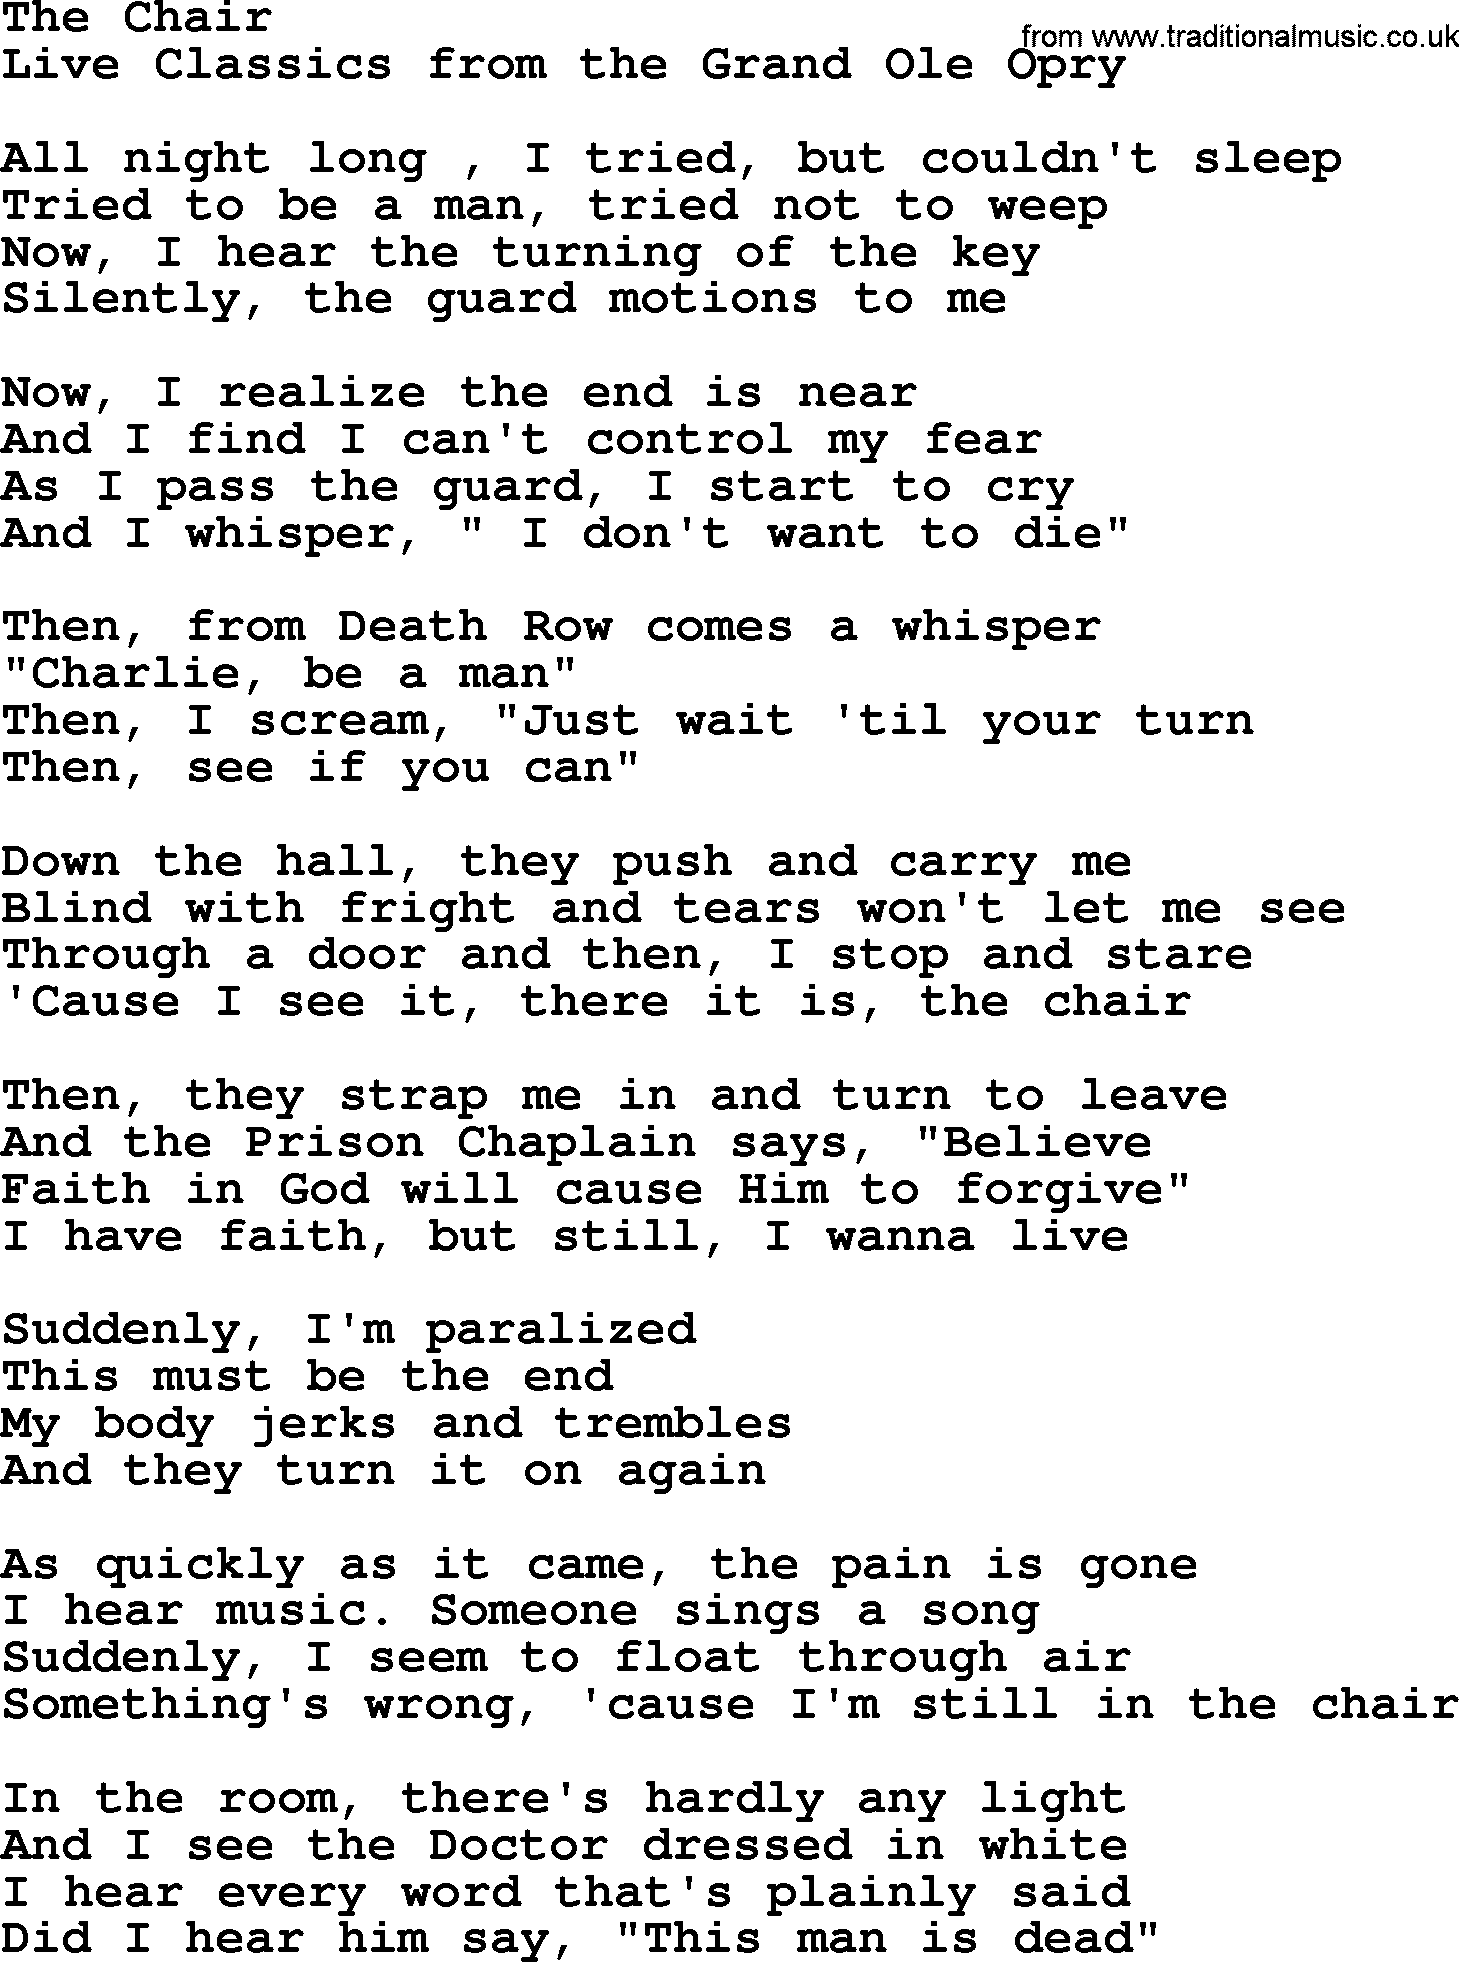 Marty Robbins song: The Chair, lyrics